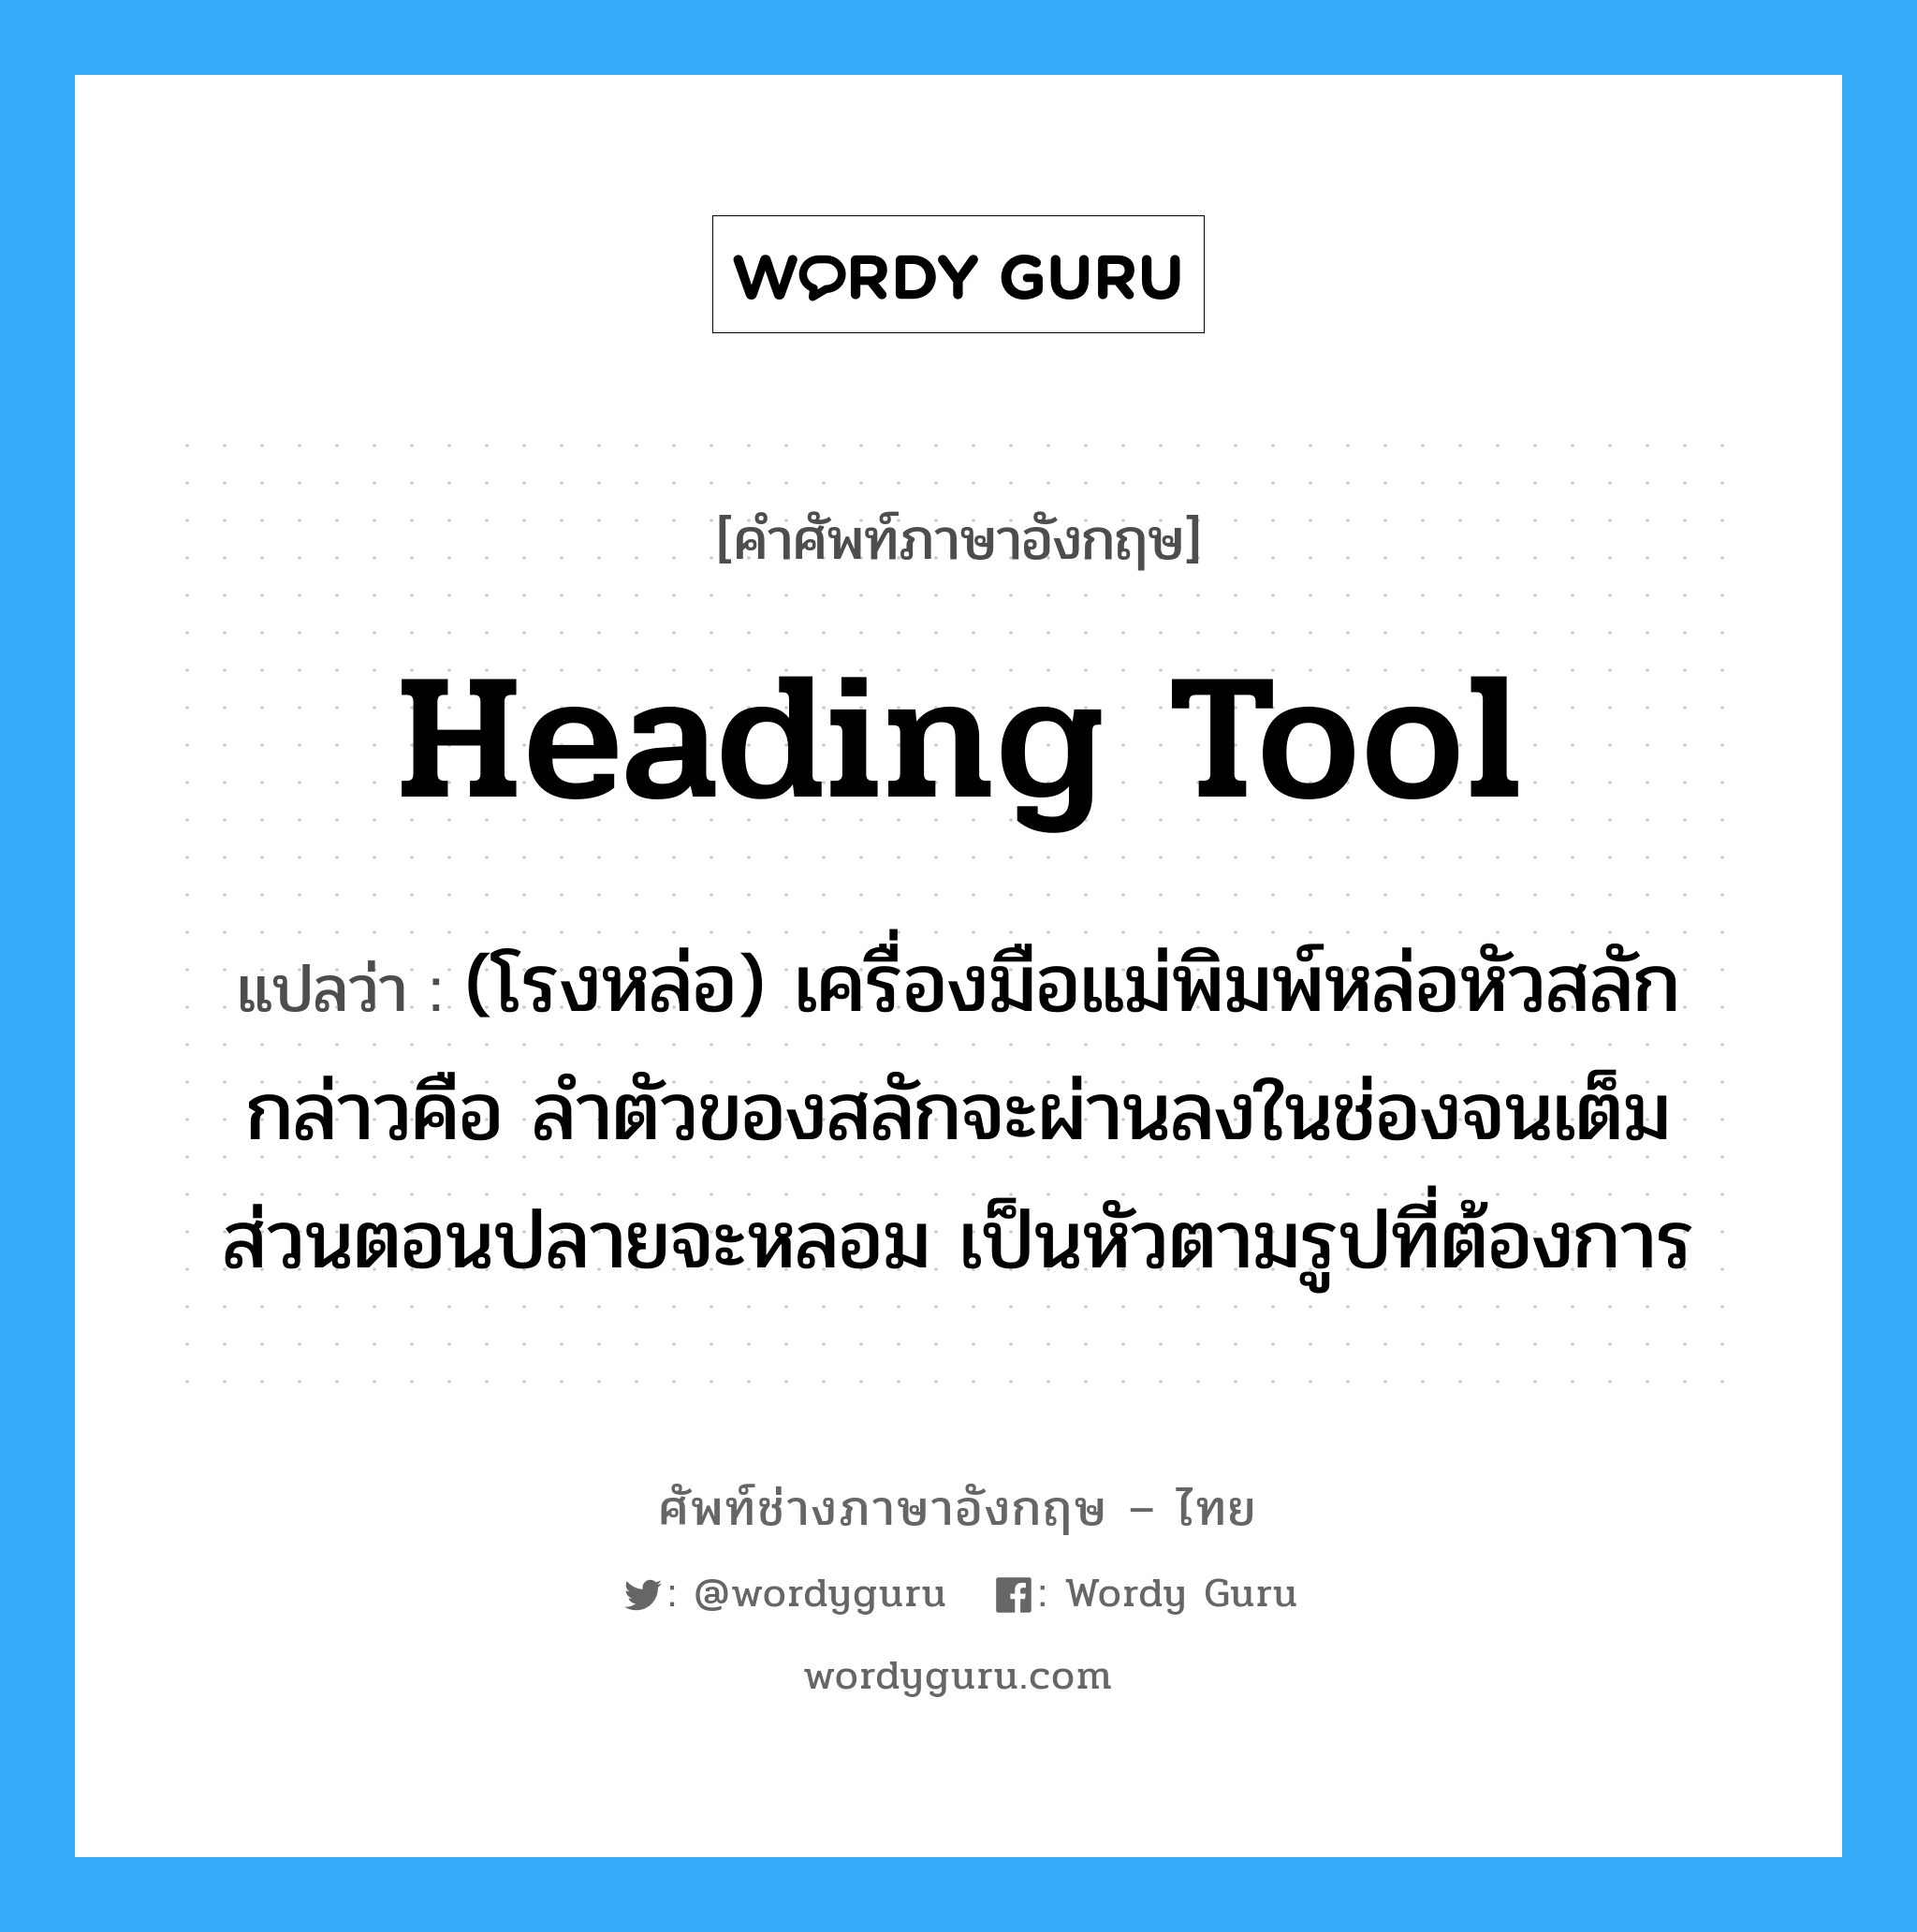 heading tool แปลว่า?, คำศัพท์ช่างภาษาอังกฤษ - ไทย heading tool คำศัพท์ภาษาอังกฤษ heading tool แปลว่า (โรงหล่อ) เครื่องมือแม่พิมพ์หล่อหัวสลัก กล่าวคือ ลำตัวของสลักจะผ่านลงในช่องจนเต็ม ส่วนตอนปลายจะหลอม เป็นหัวตามรูปที่ต้องการ